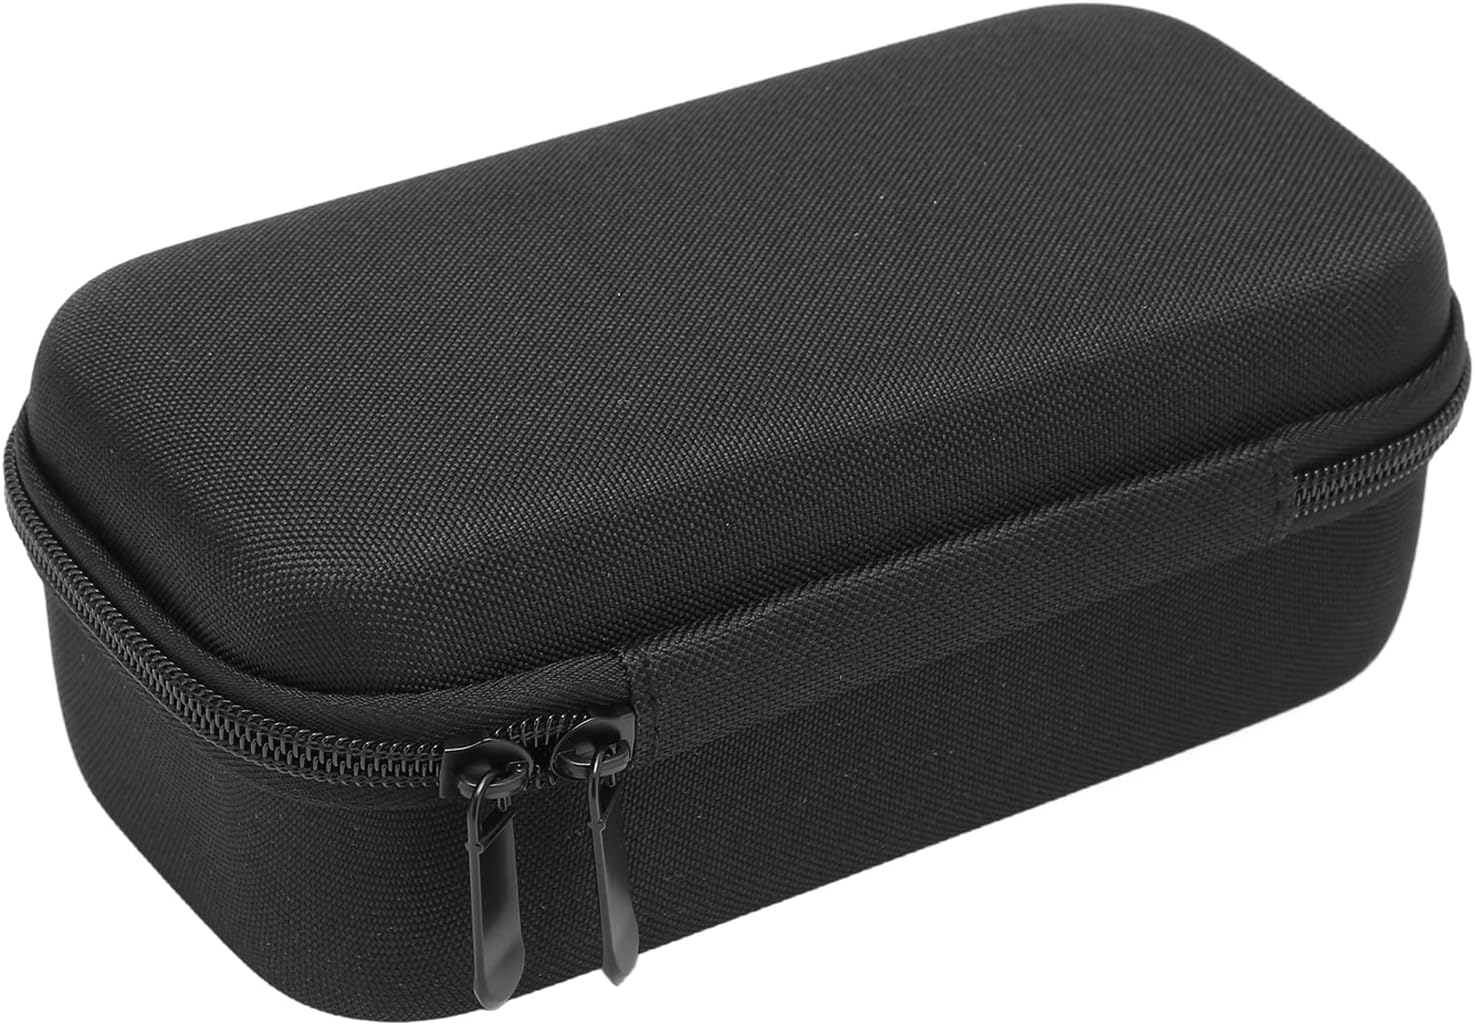 Gaming Mouse EVA Case for Razer Basilisk , Portable Mouse Storage Bag Travel Carrying Bag for Wireless Mice, Waterproof Shock Resistant